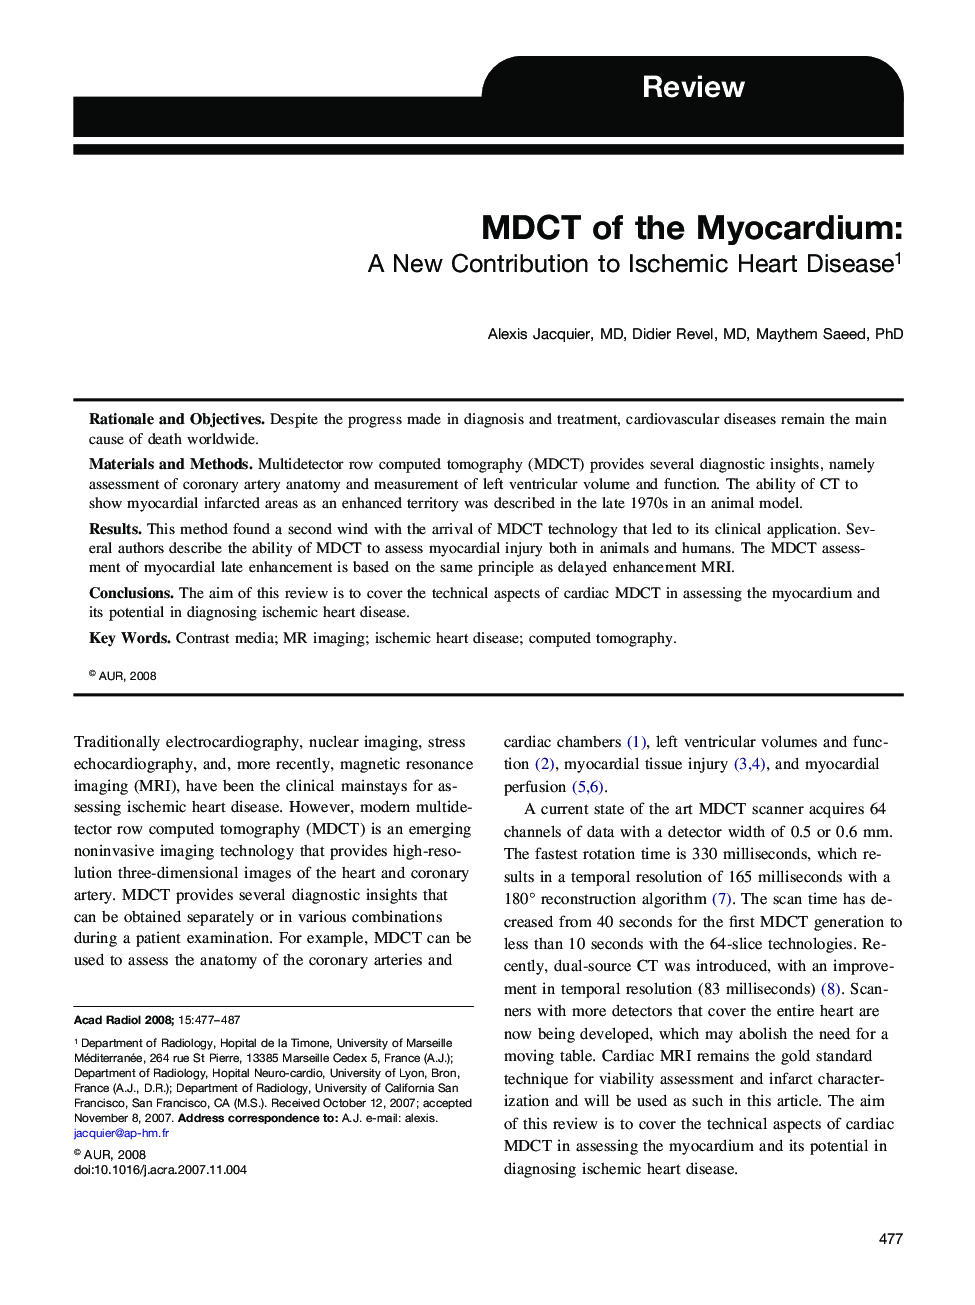 MDCT of the Myocardium